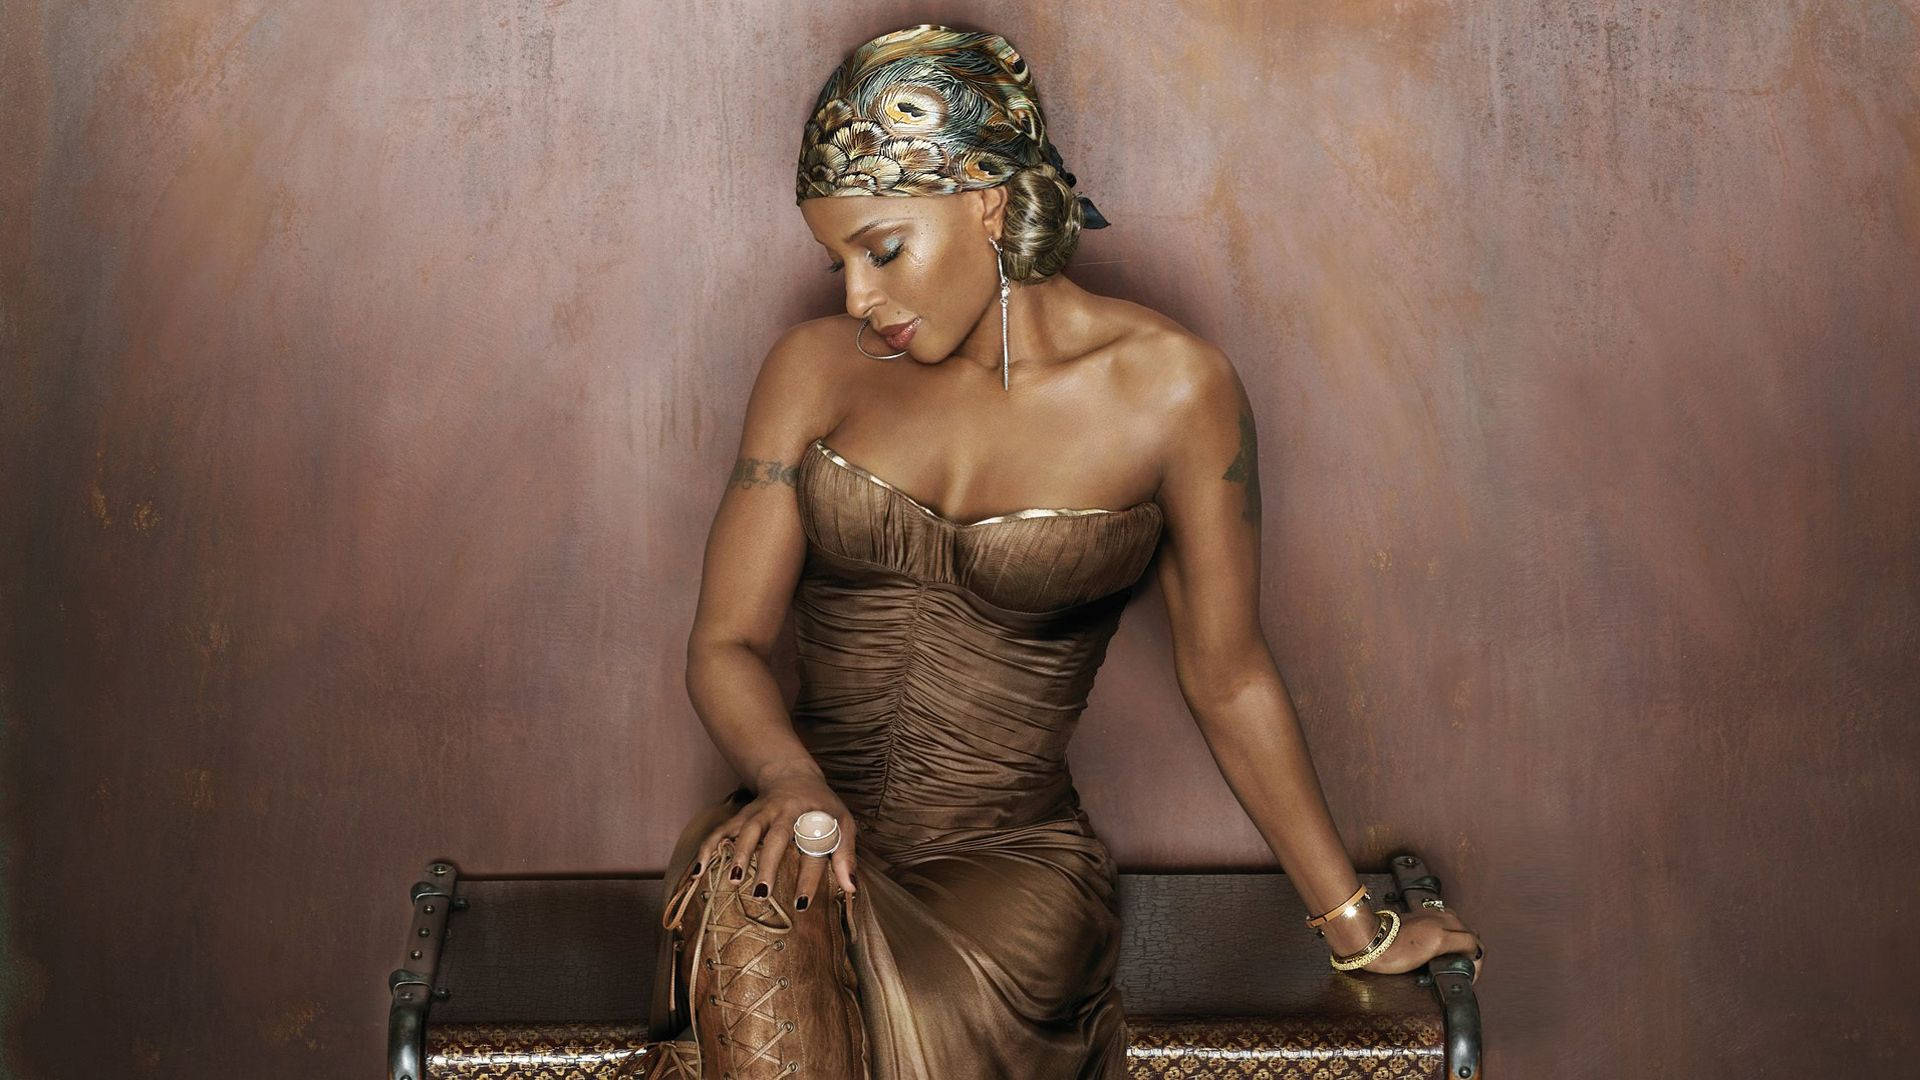 Mary J. Blige In A Dress By Markus Klinko Background